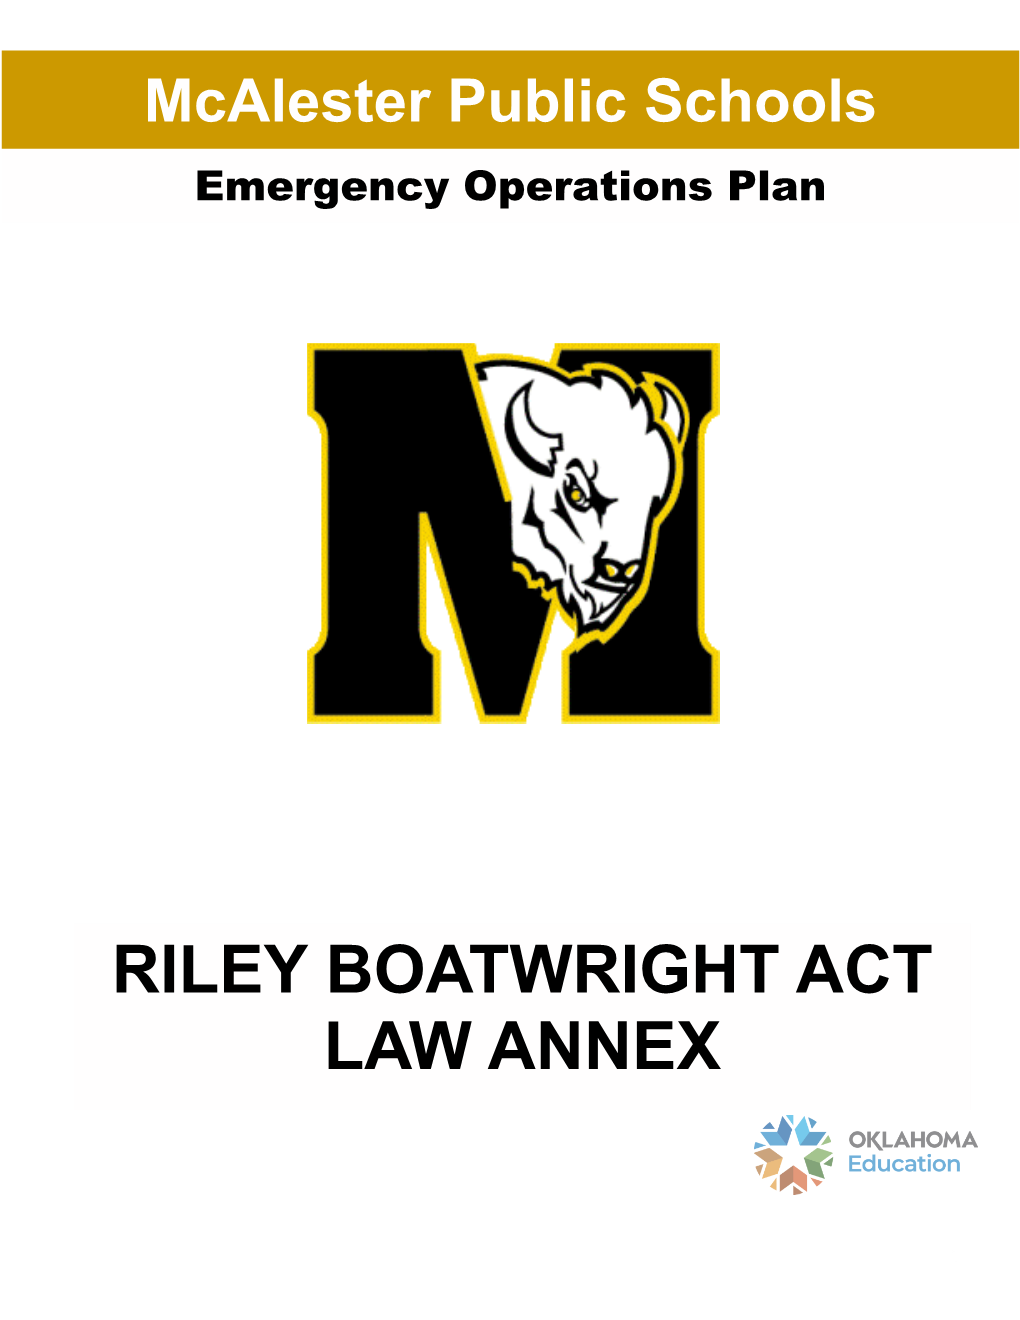 Riley Boatwright Act Law Annex